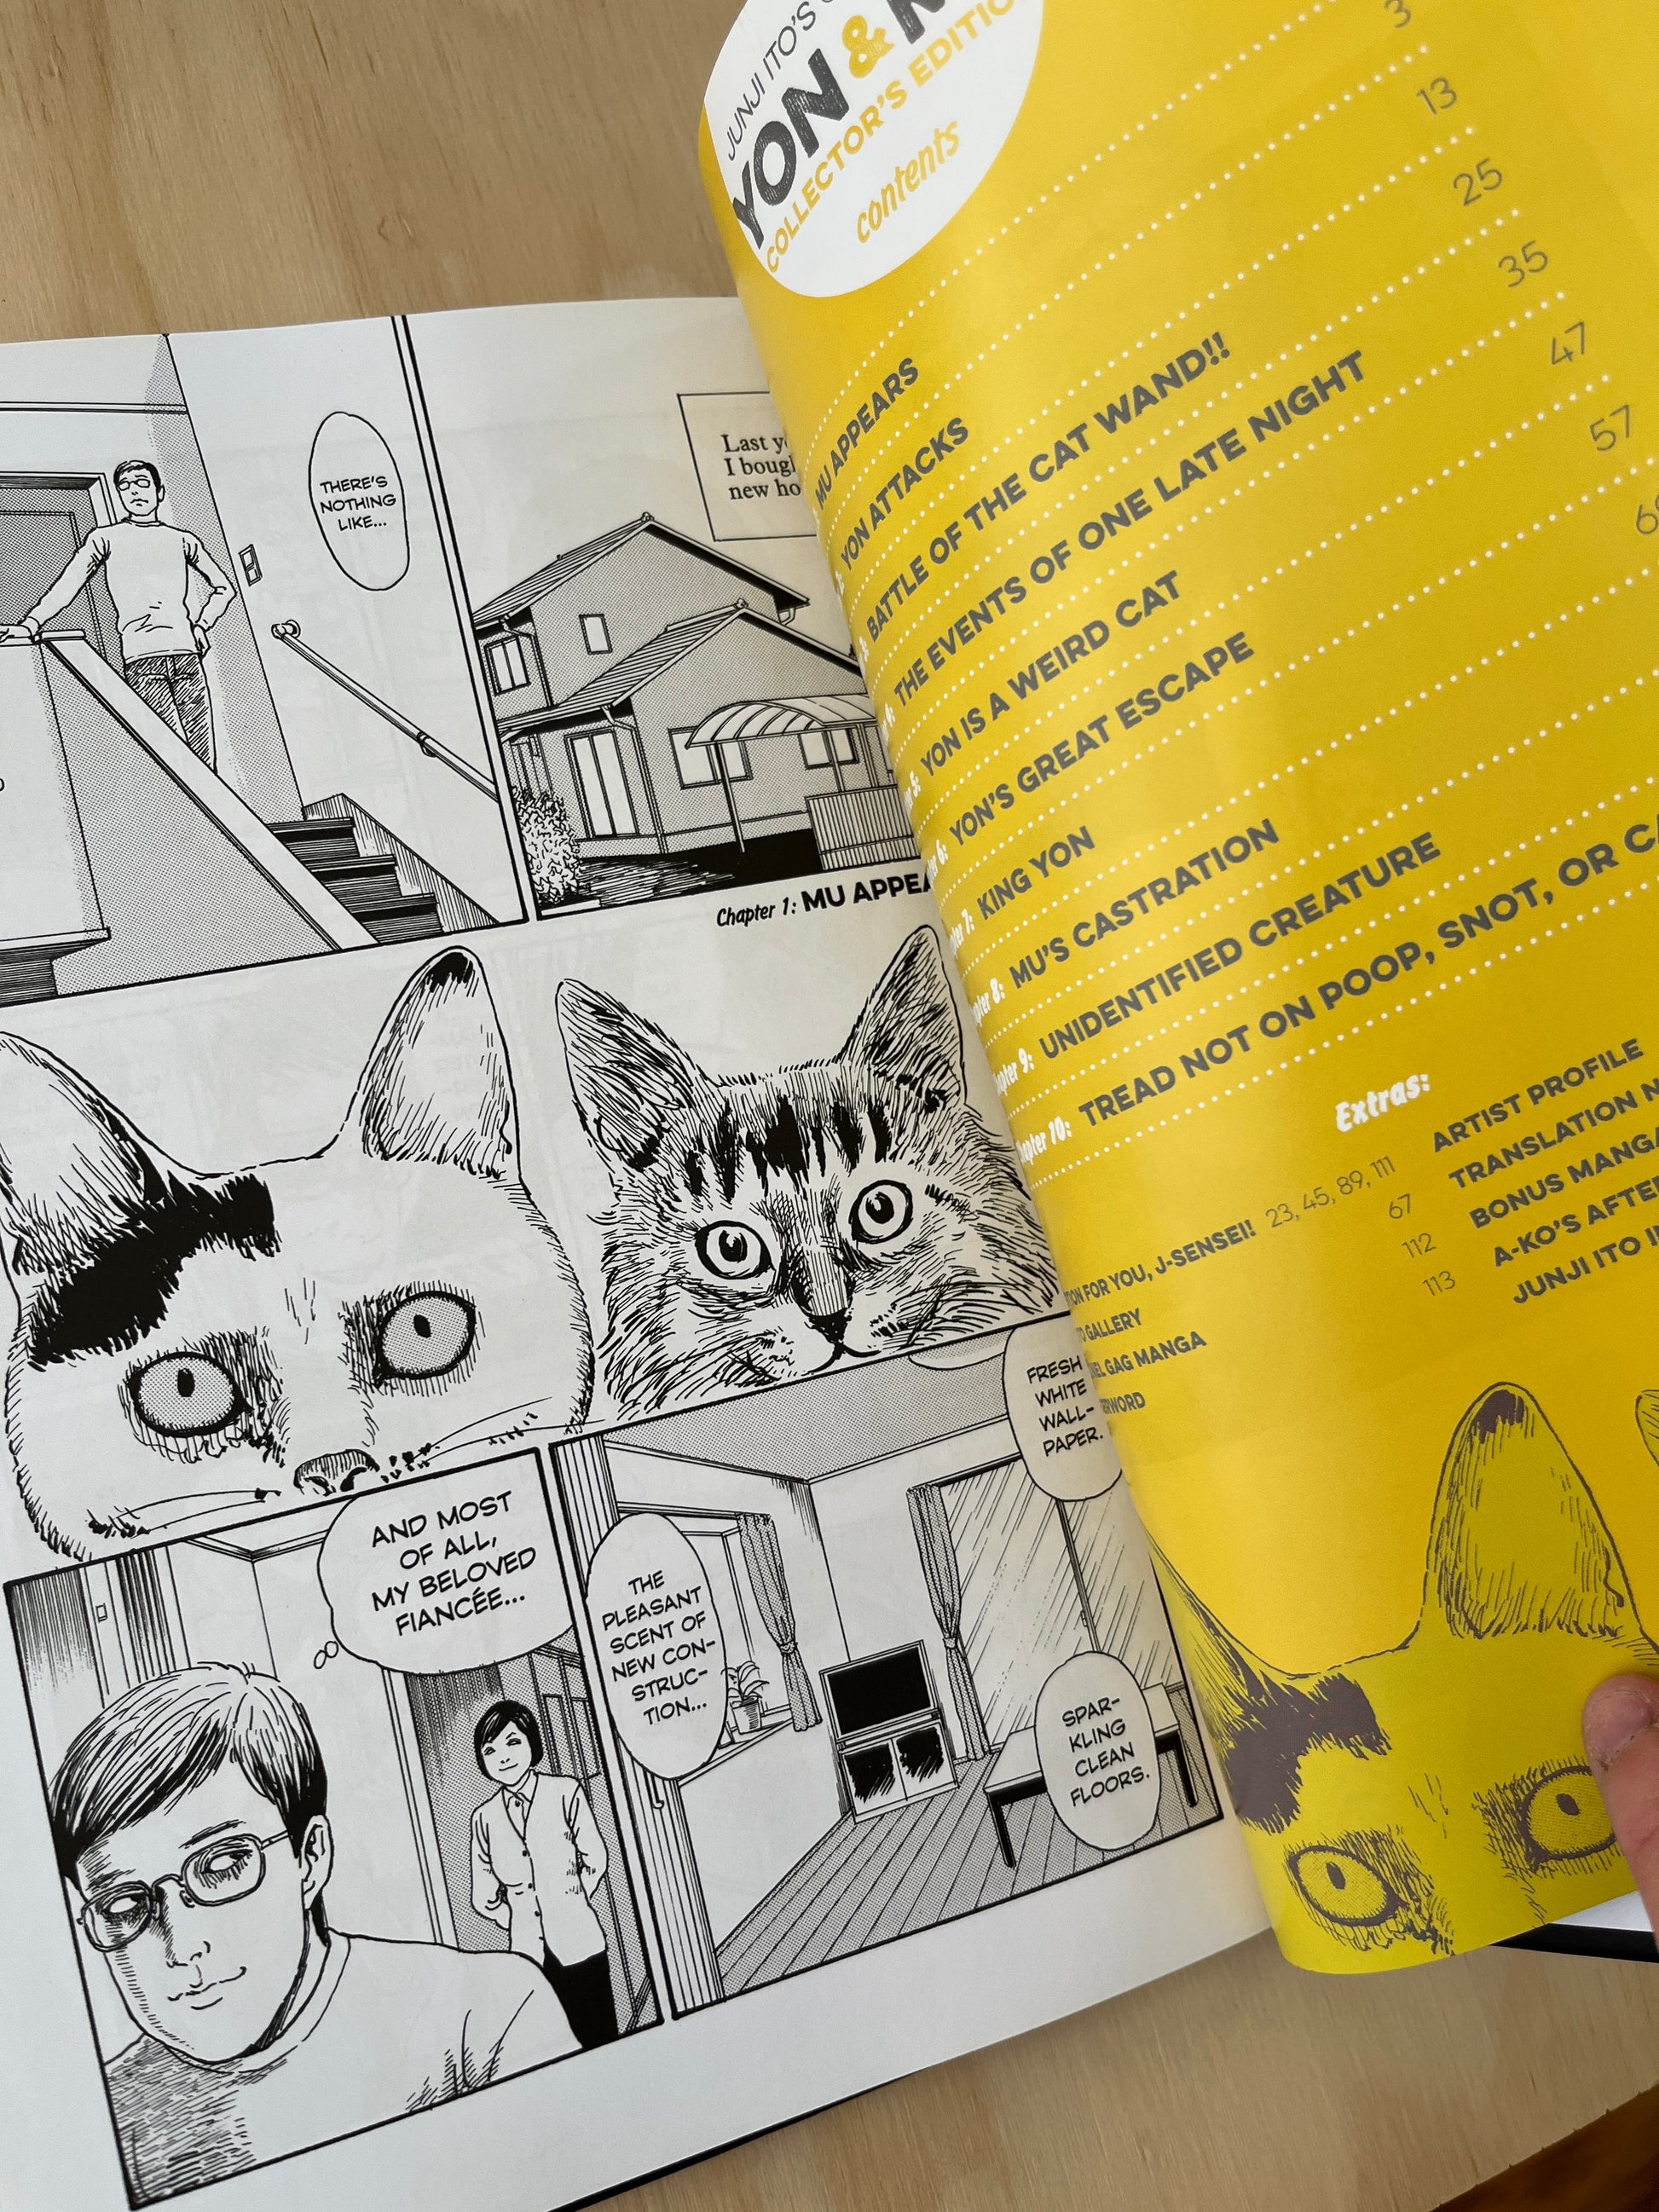 Junji Ito's Cat Diary: Yon & Mu by Junji Ito, Paperback